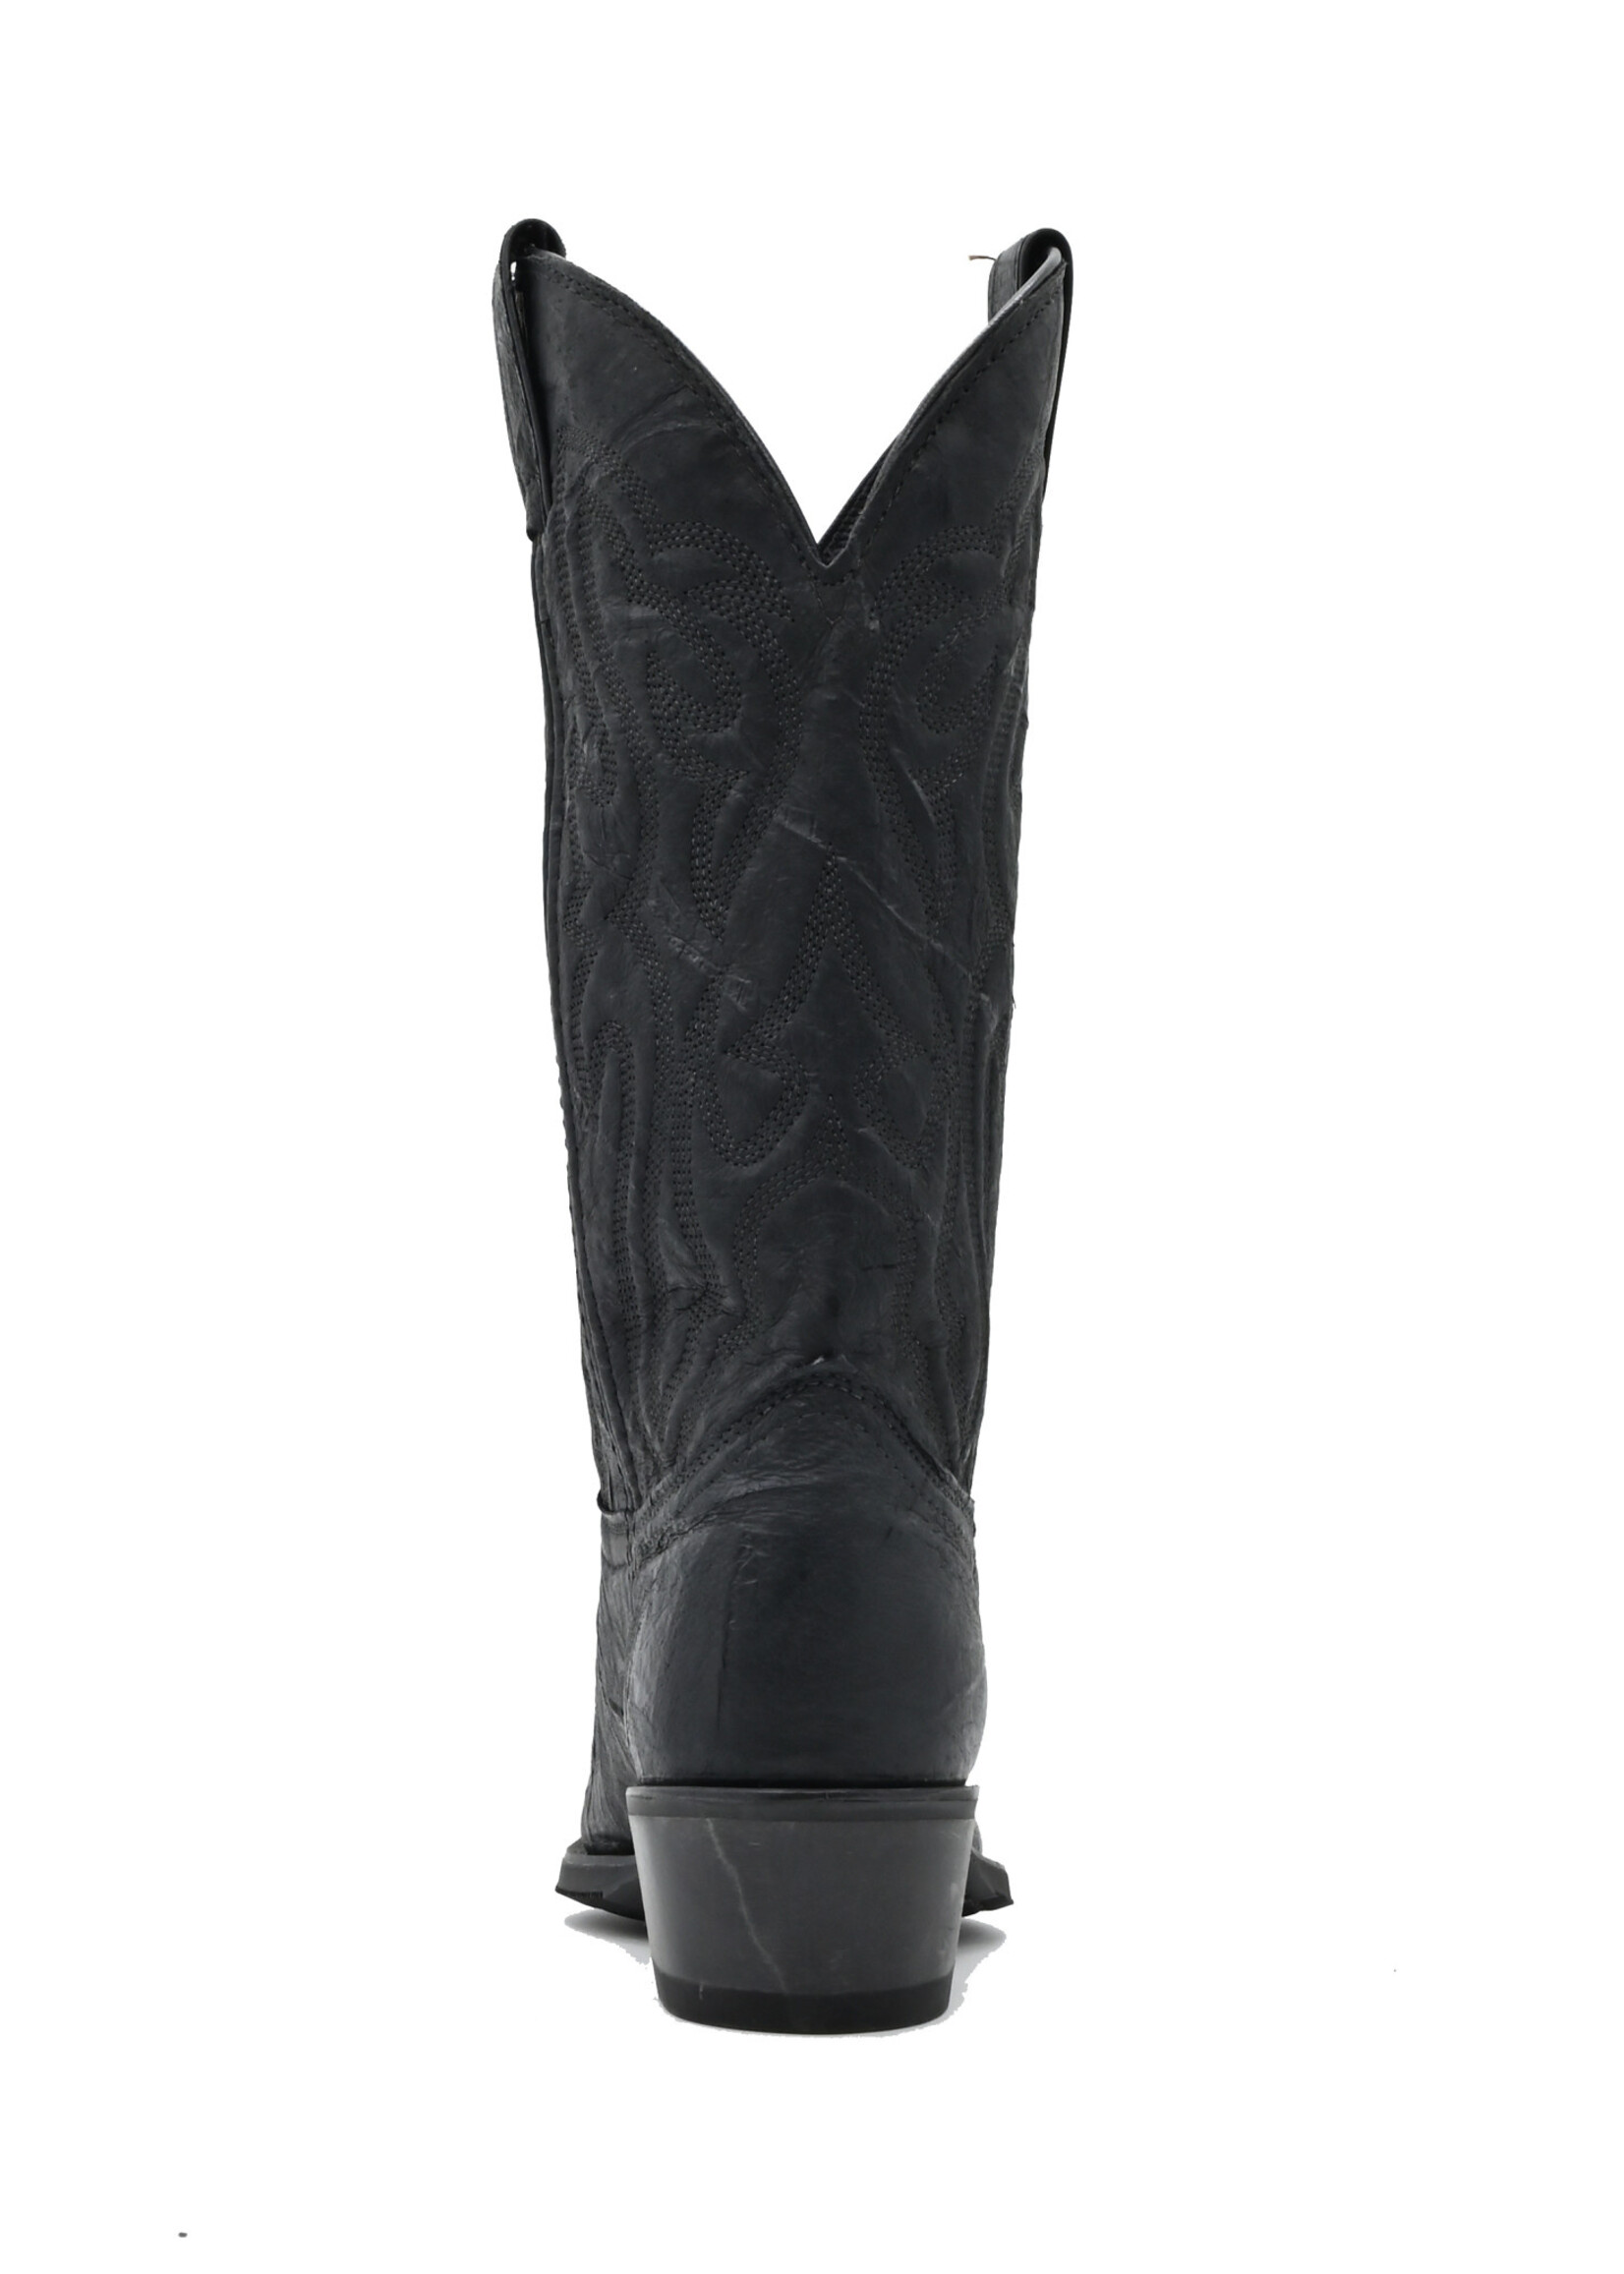 Texas 7640 - Black Boot (Size 7D)